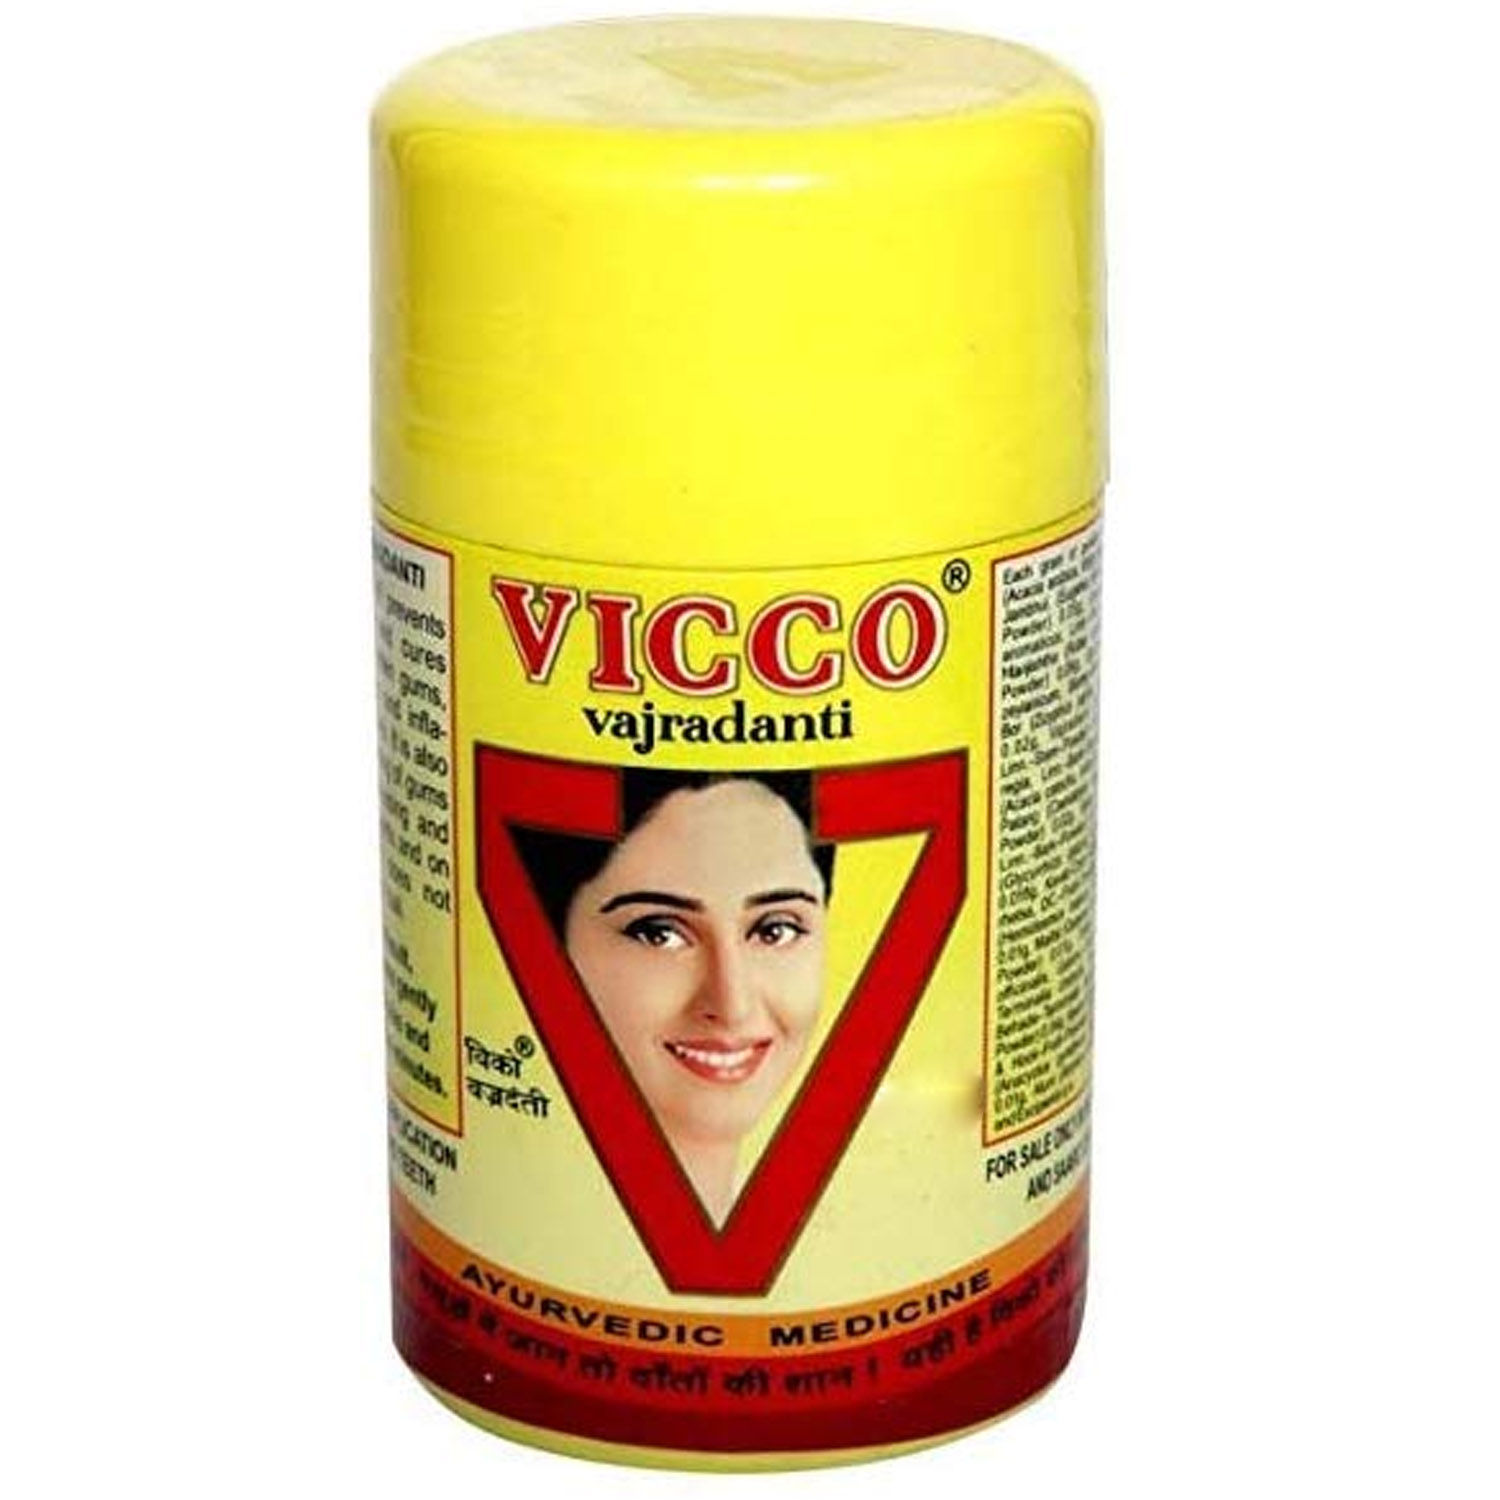 Buy Vicco Vajradanti Ayurvedic Tooth Powder, 25 gm Online